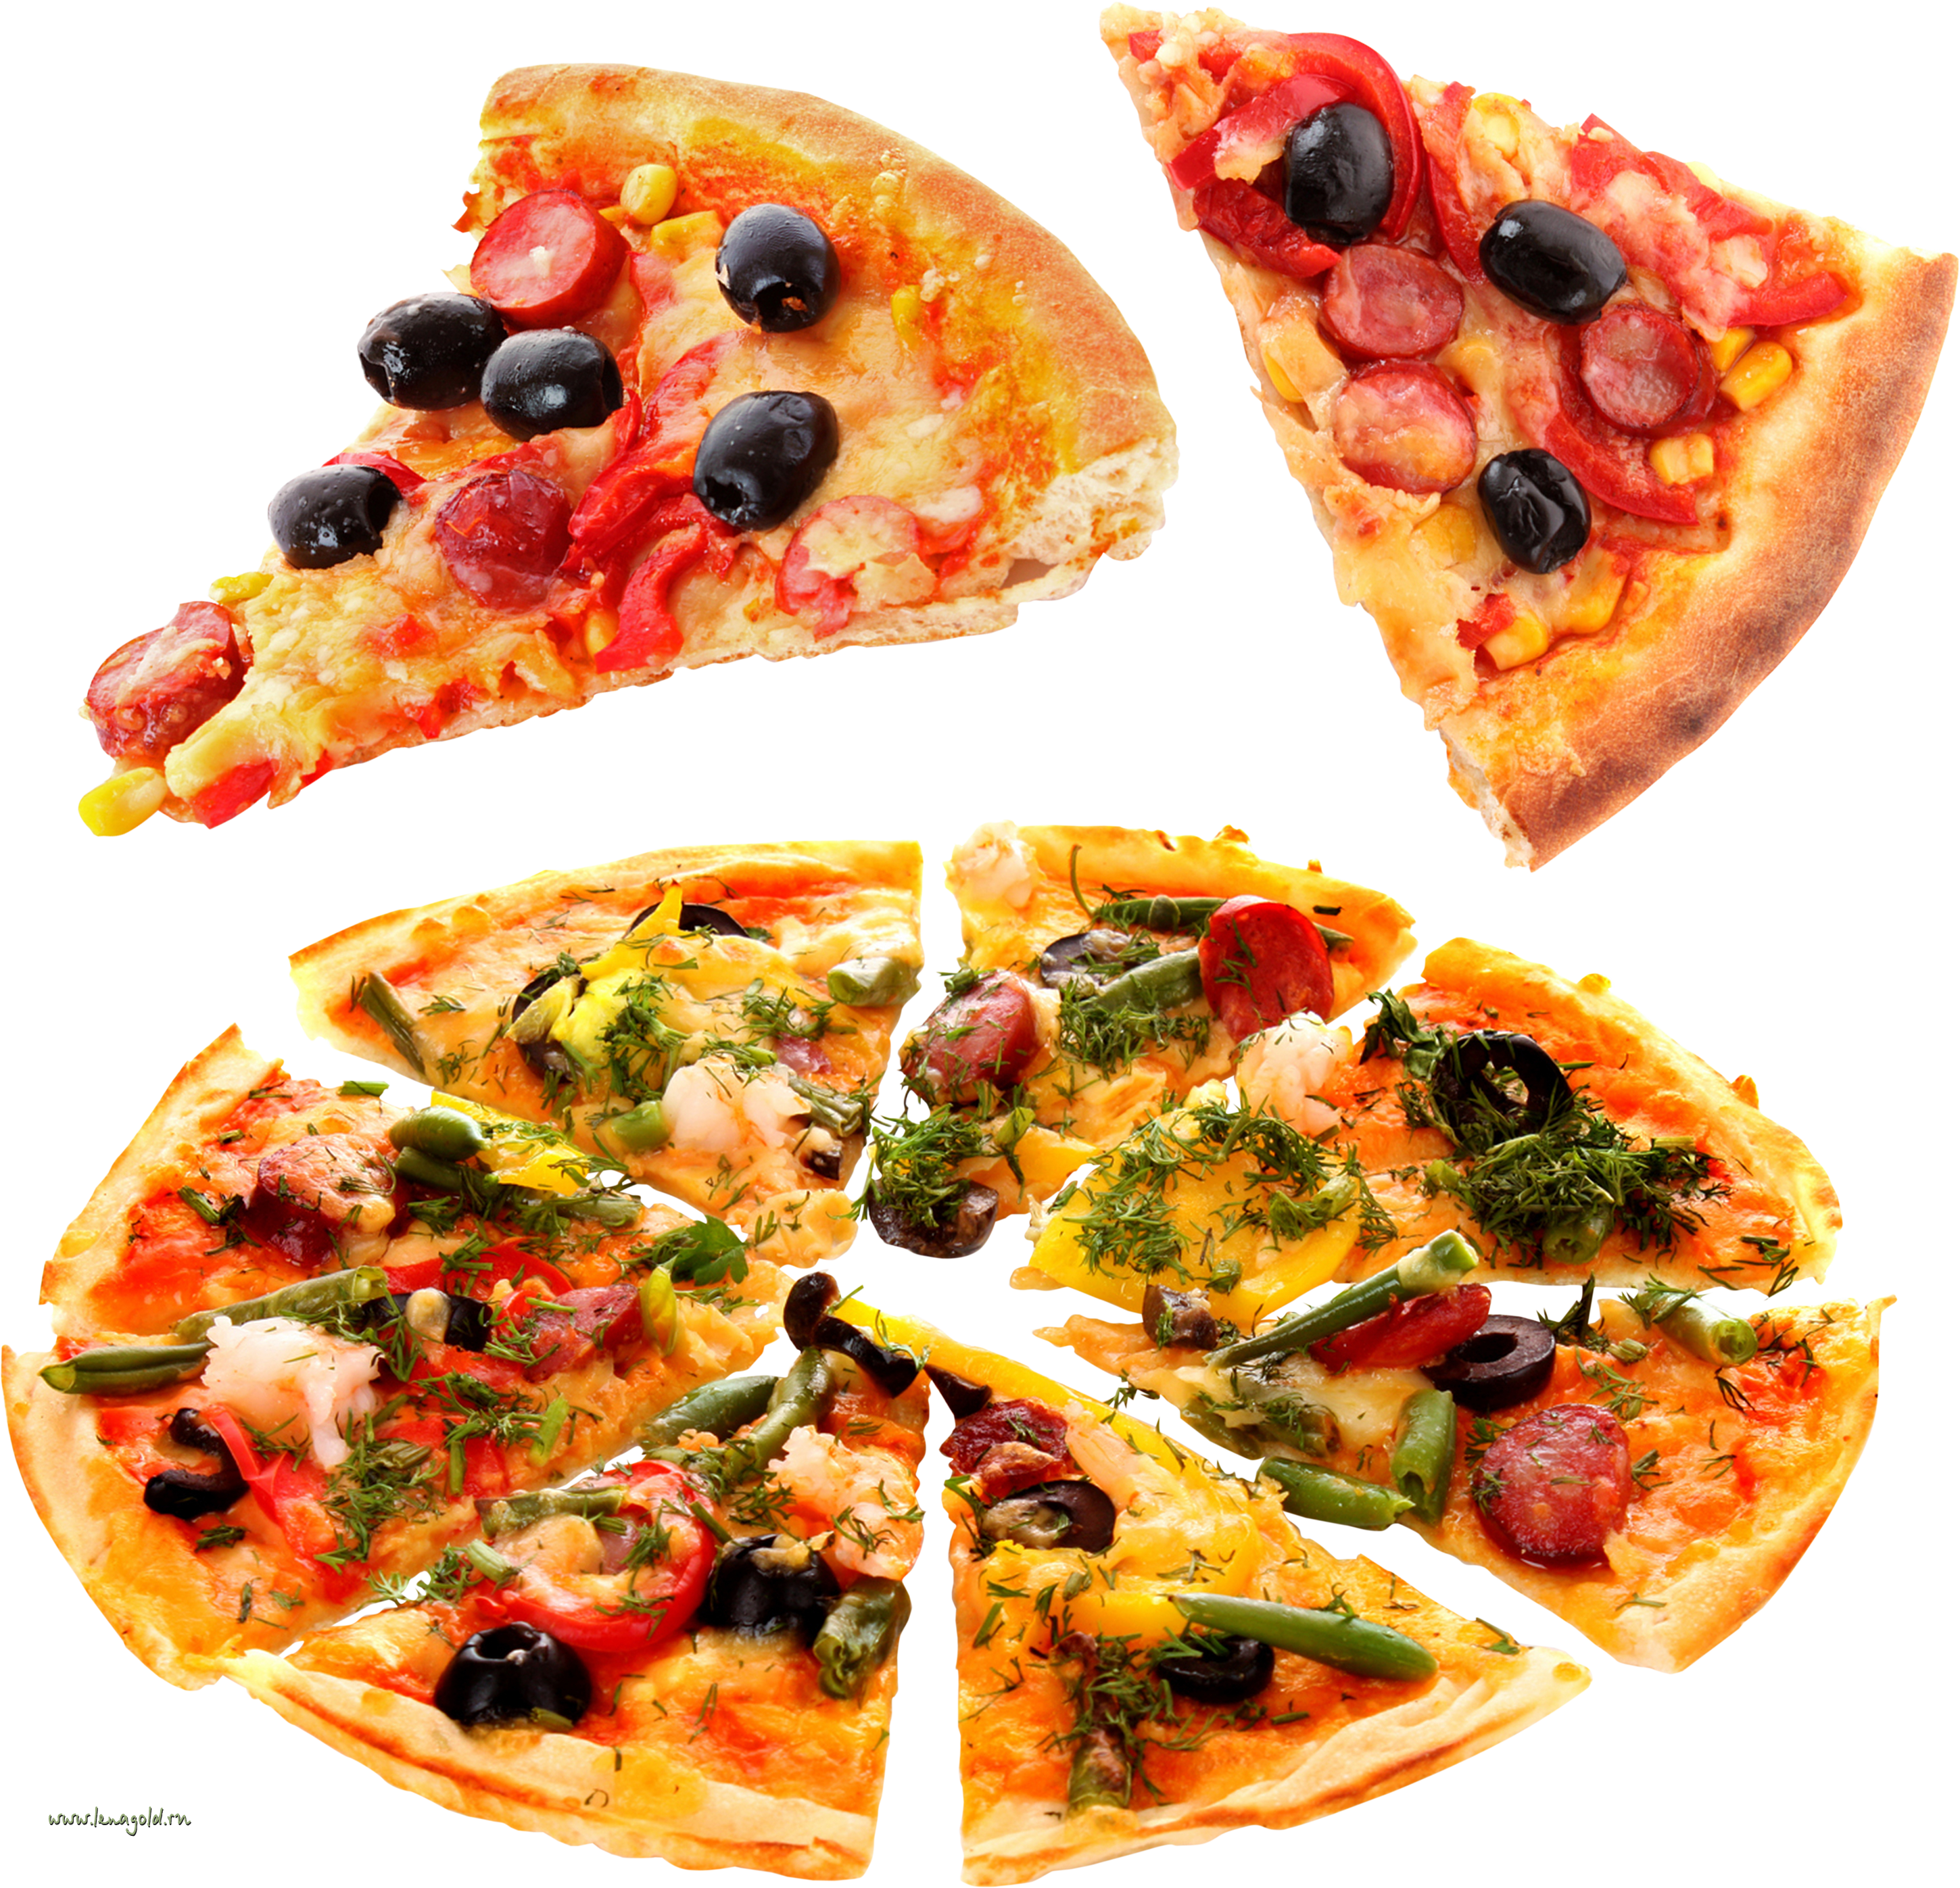 italian clipart simple pizza